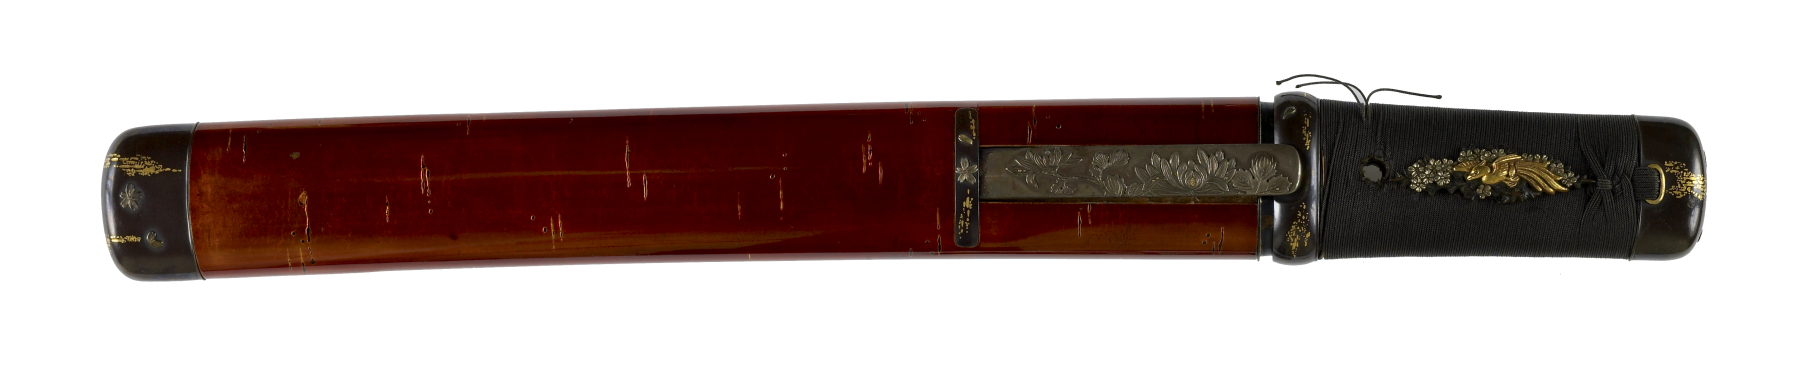 Image for Dagger (aikuchi) with sheath imitating cherry tree bark (includes 51.1190.1-51.1190.4)